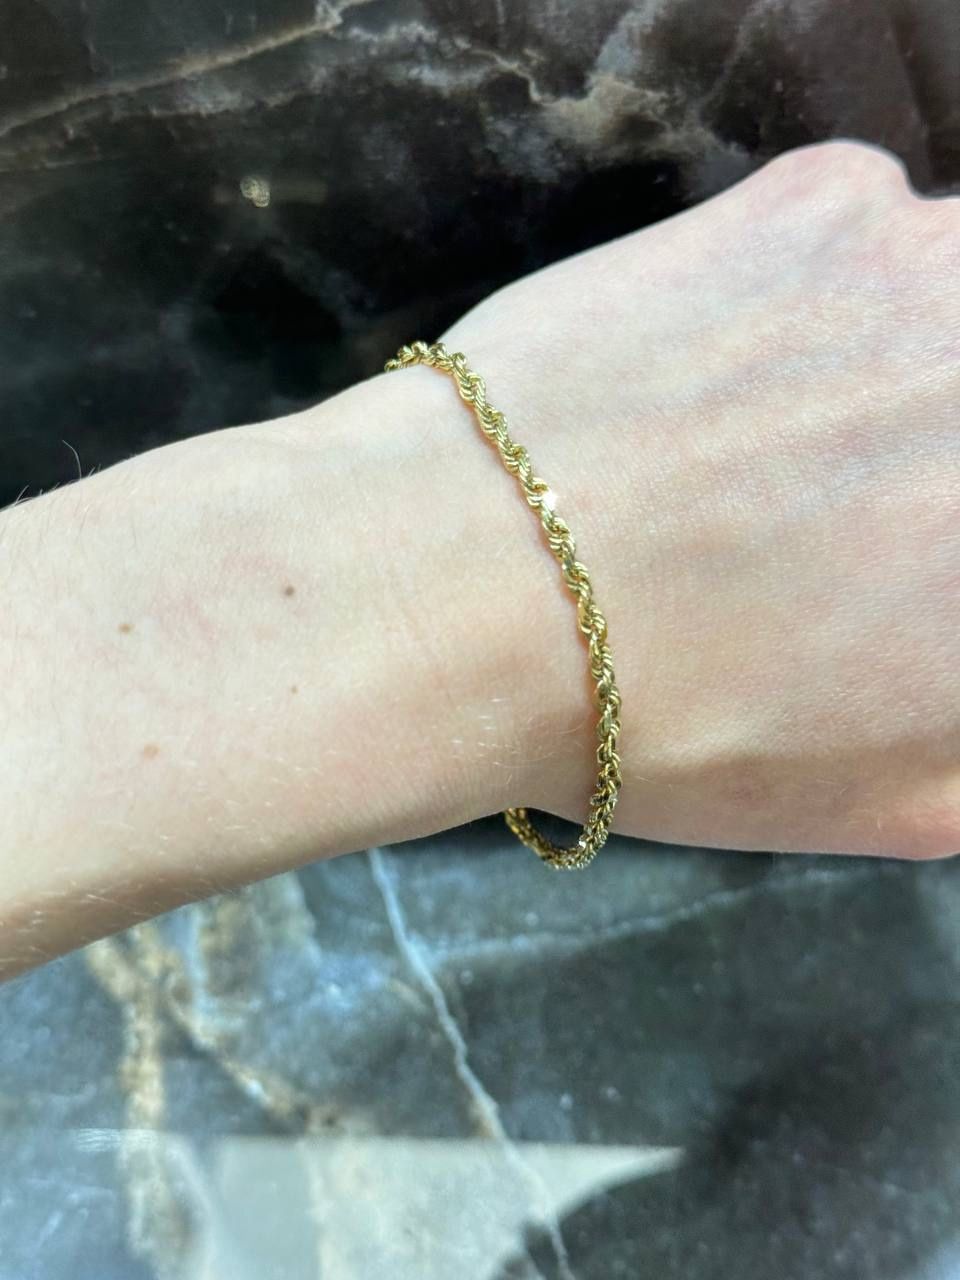 10k yellow gold rope bracelet